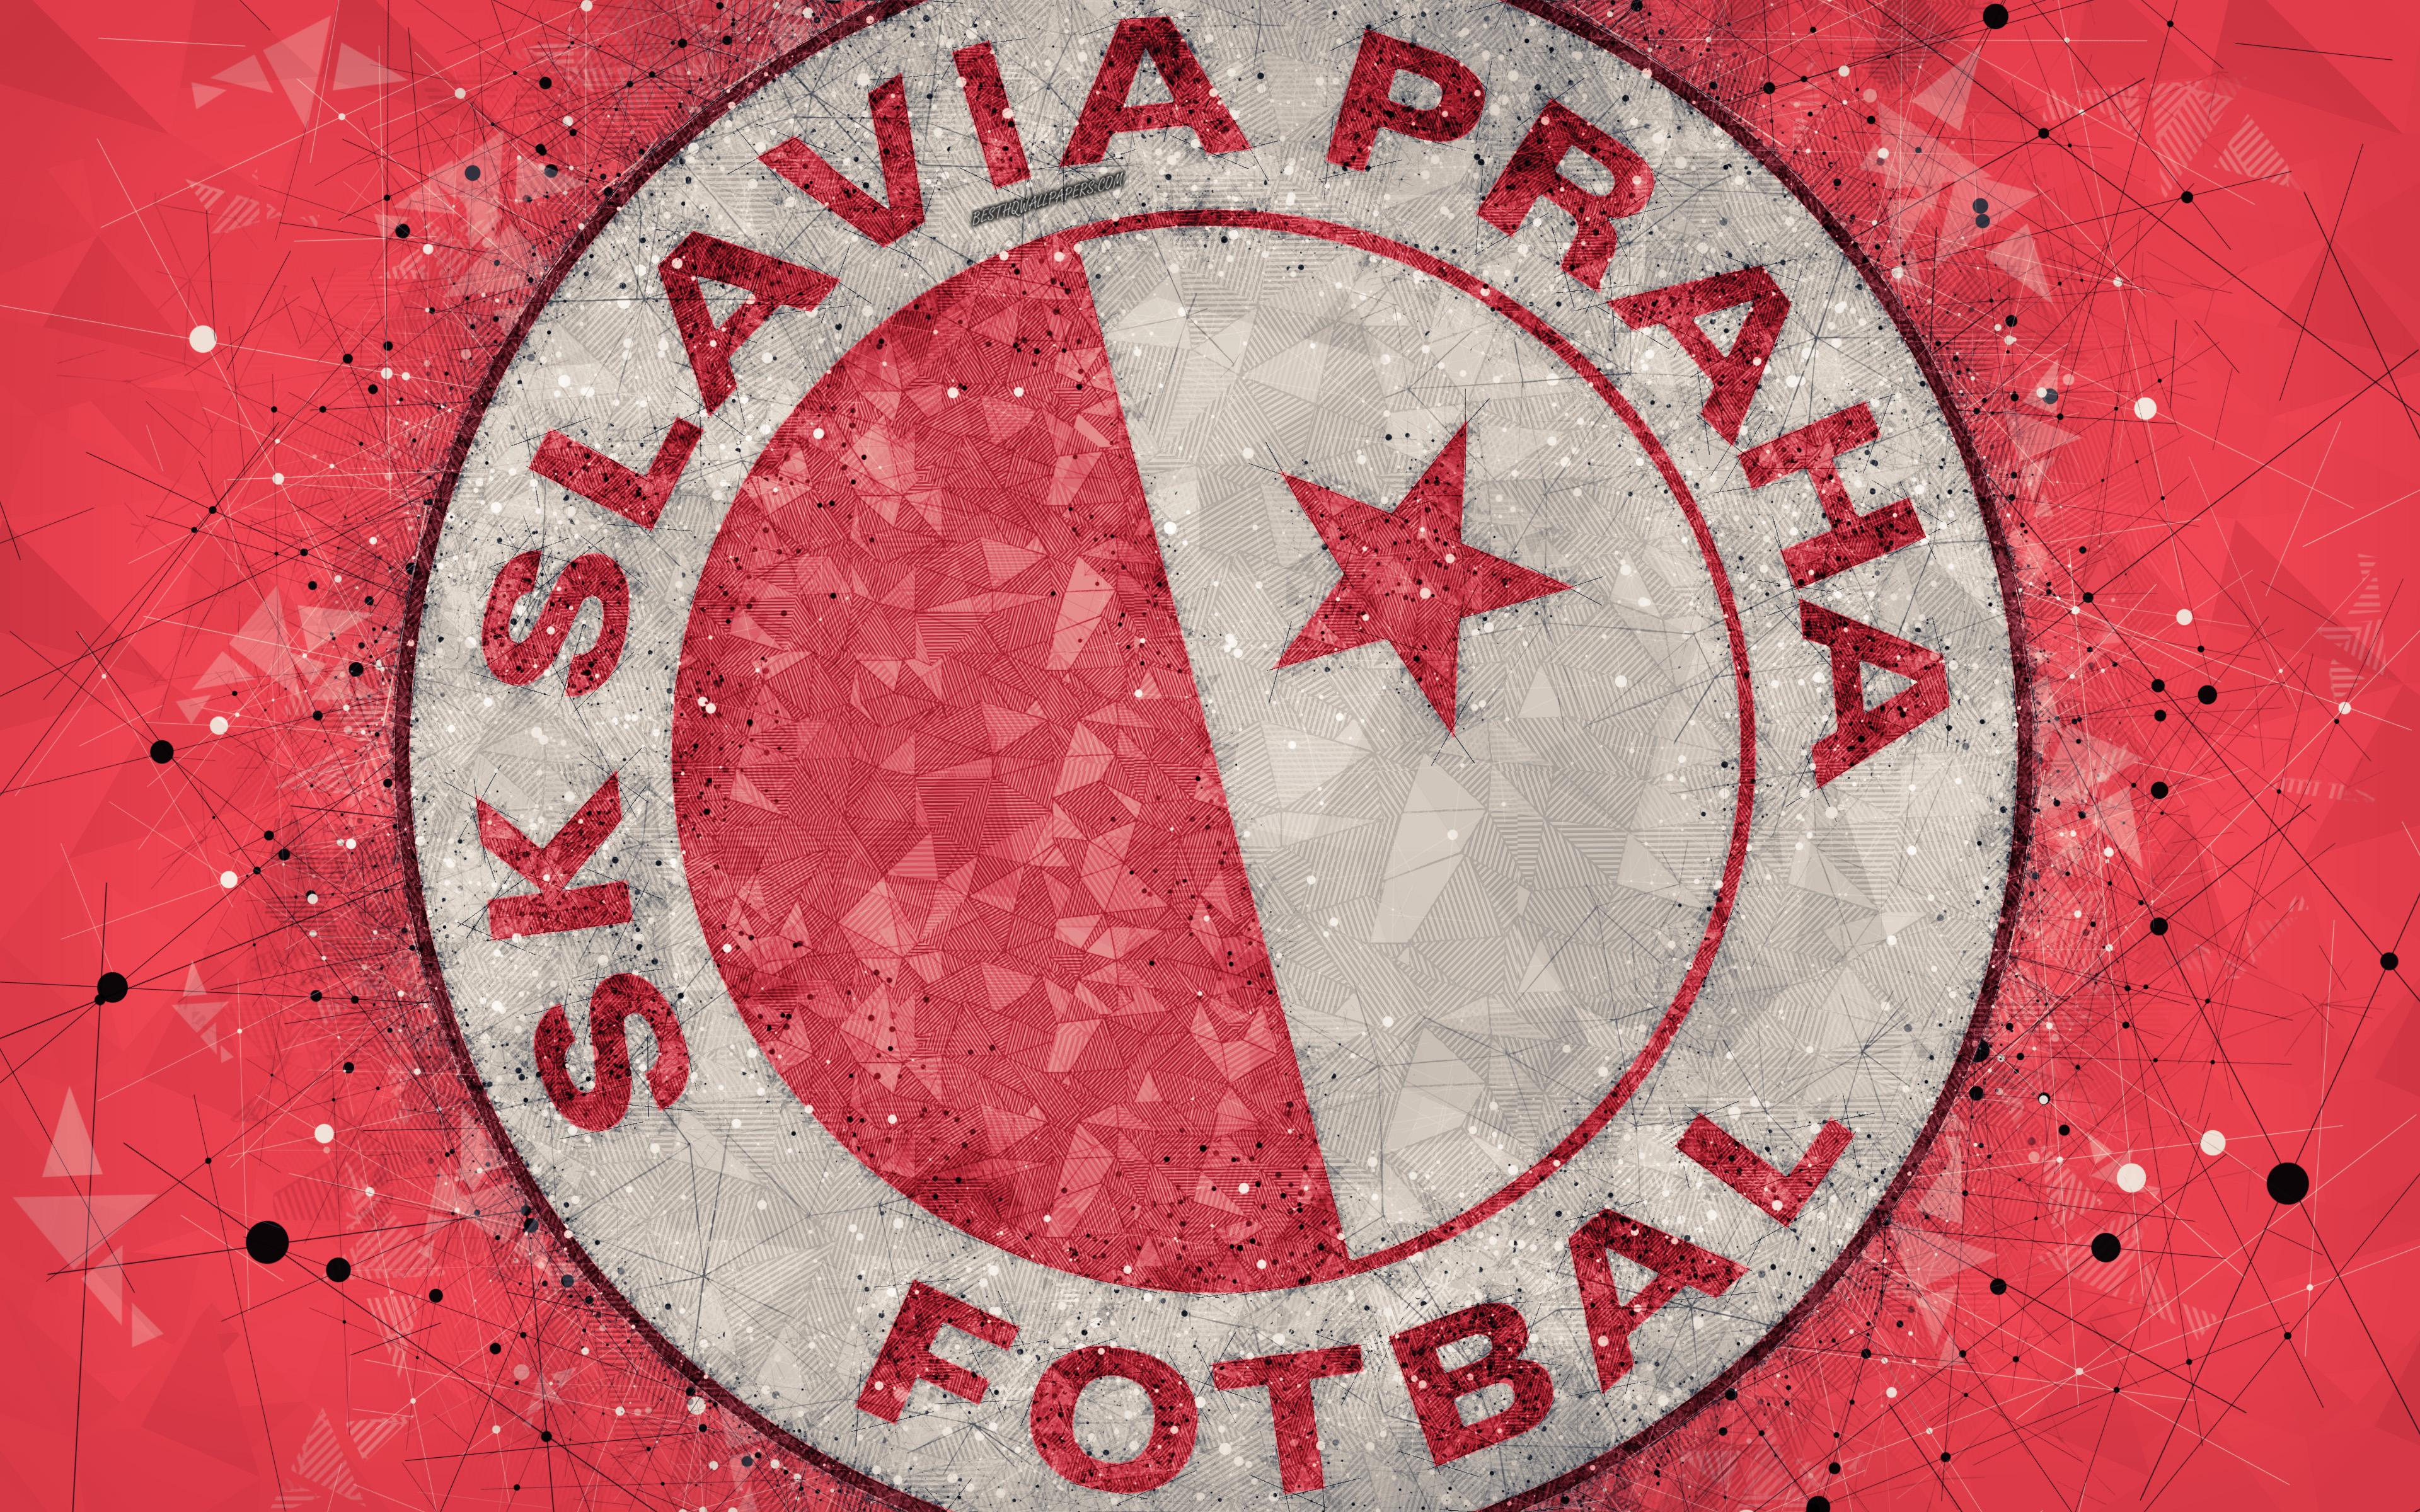 Download wallpaper SK Slavia Praha, 4k, geometric art, logo, Czech